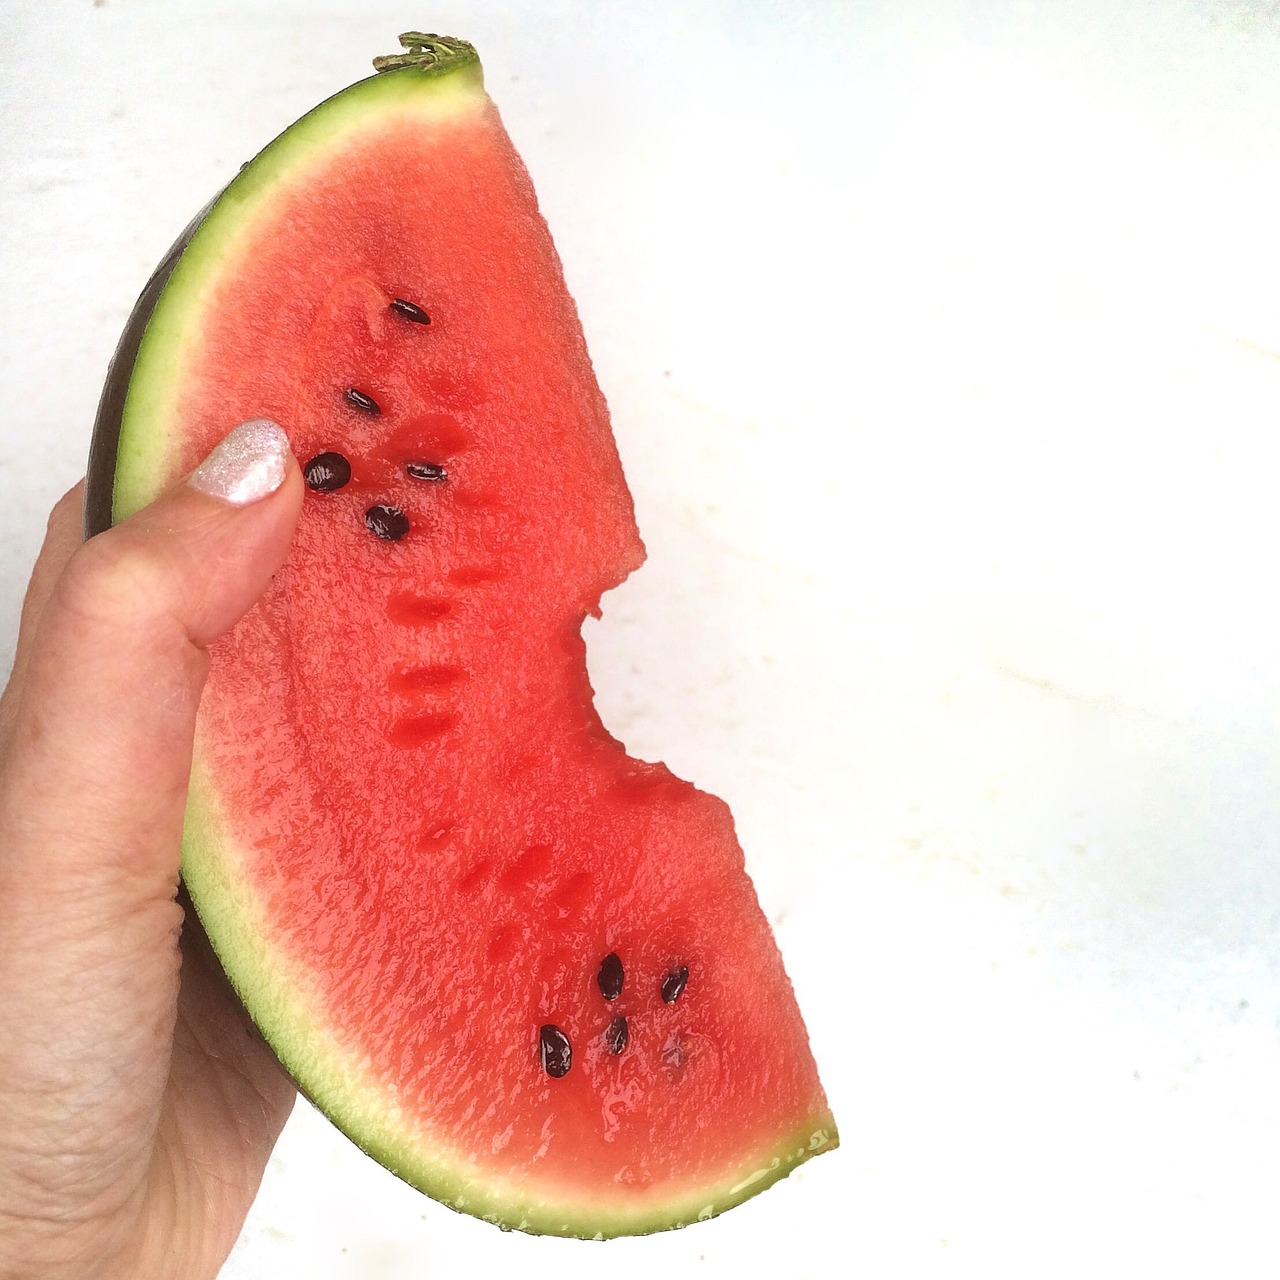 watermelon organic health free photo